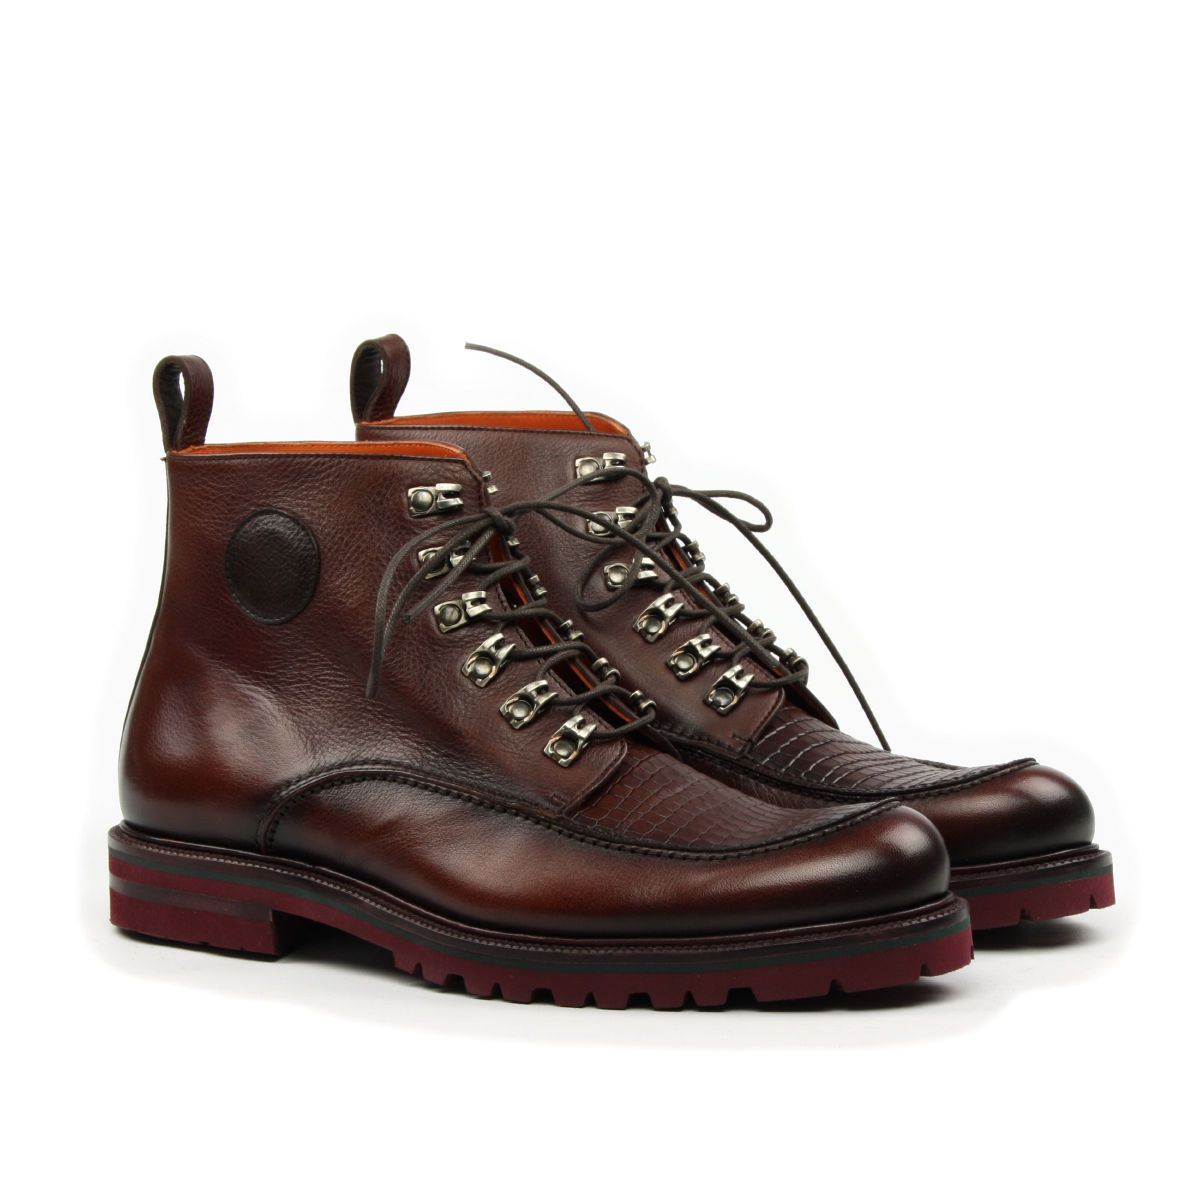 Ambrogio Men's Shoes Chocolate & Brown Lizard Print / Calf-Skin Leathe ...